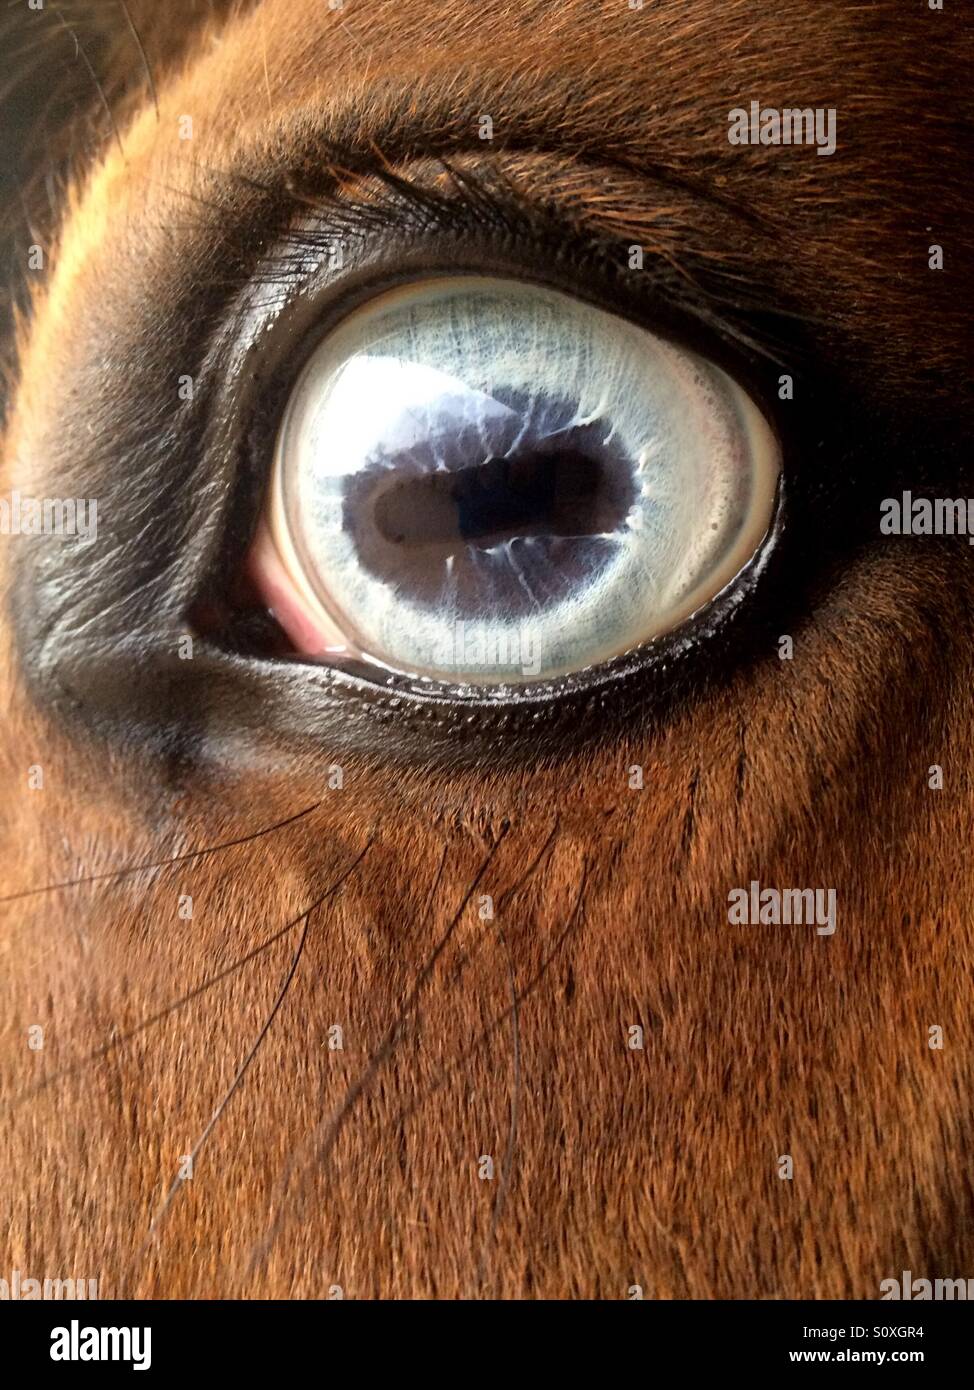 Blue eye of a horse Stock Photo